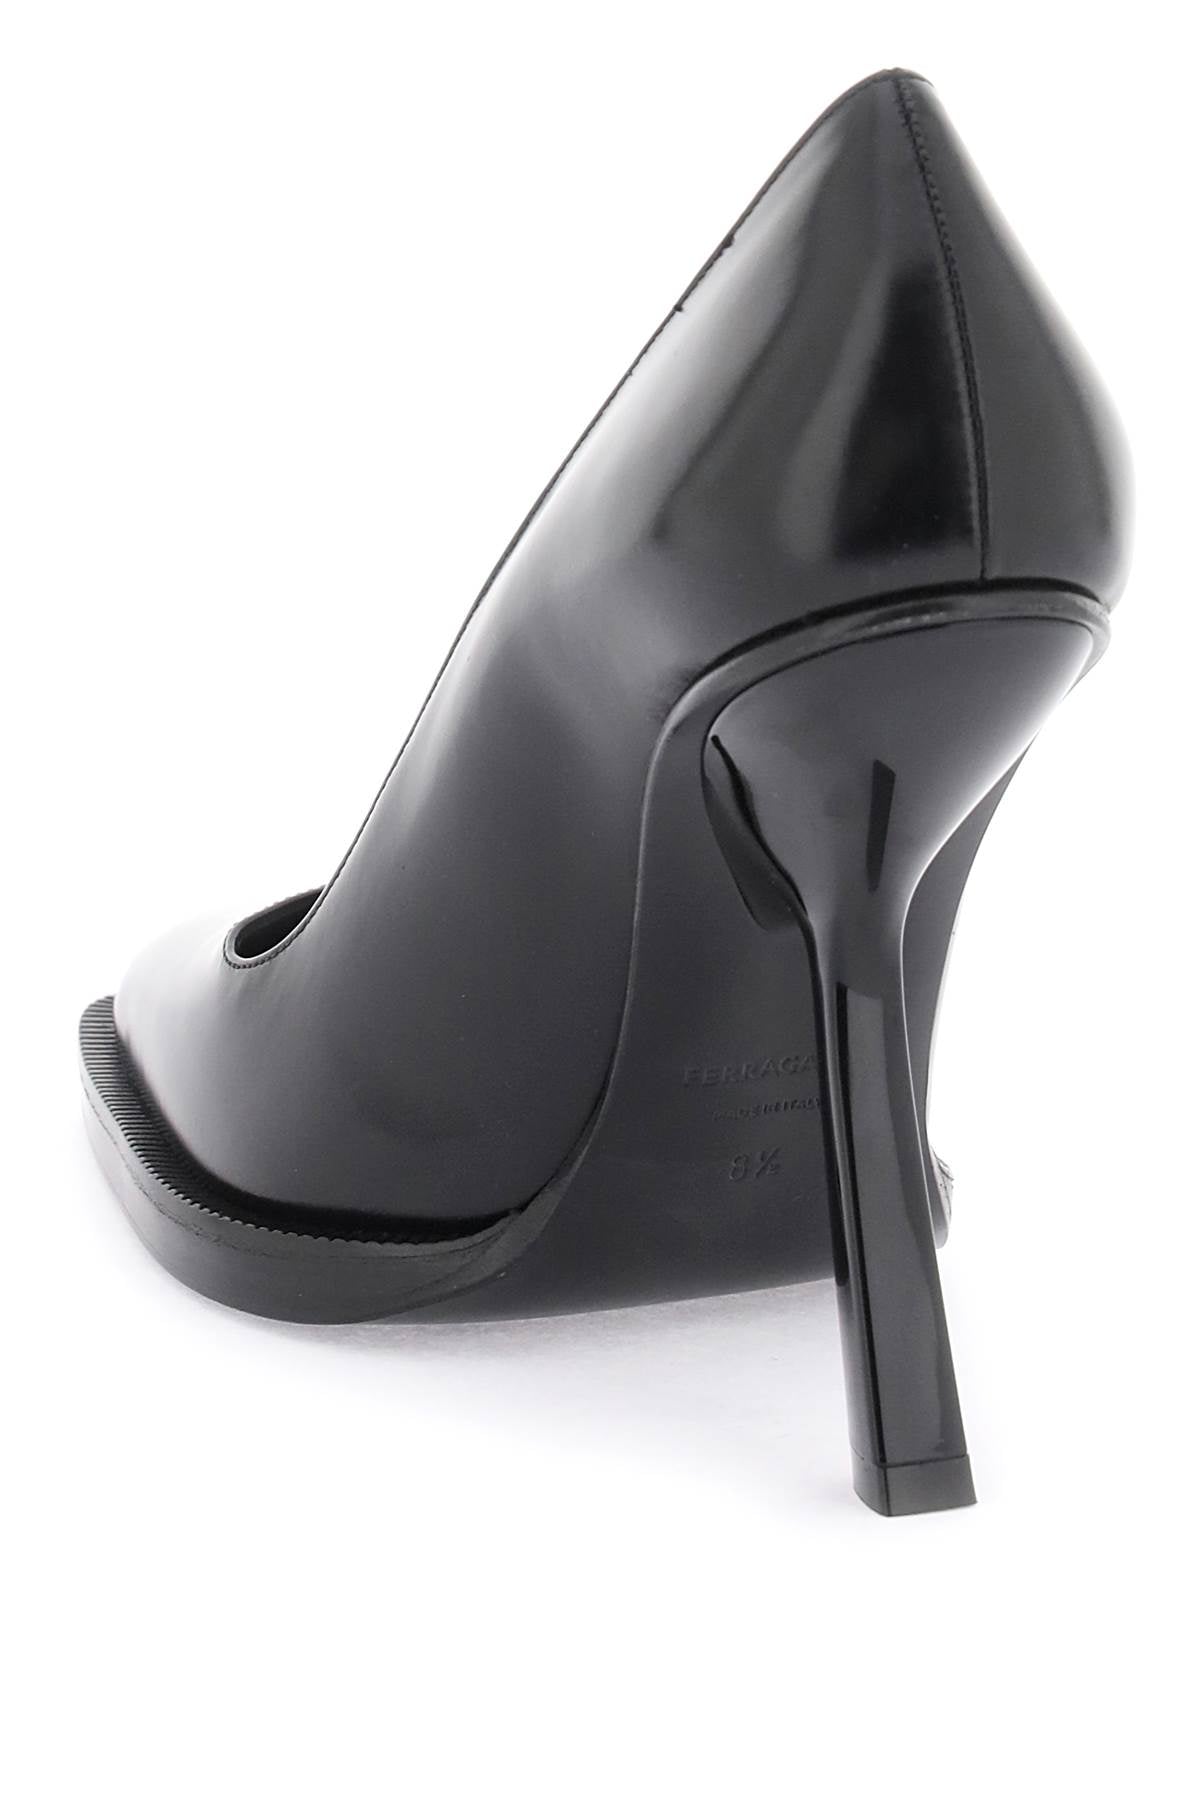 Giày cao gót da đen Ferragamo thảm xuân FW23 cho phái nữ